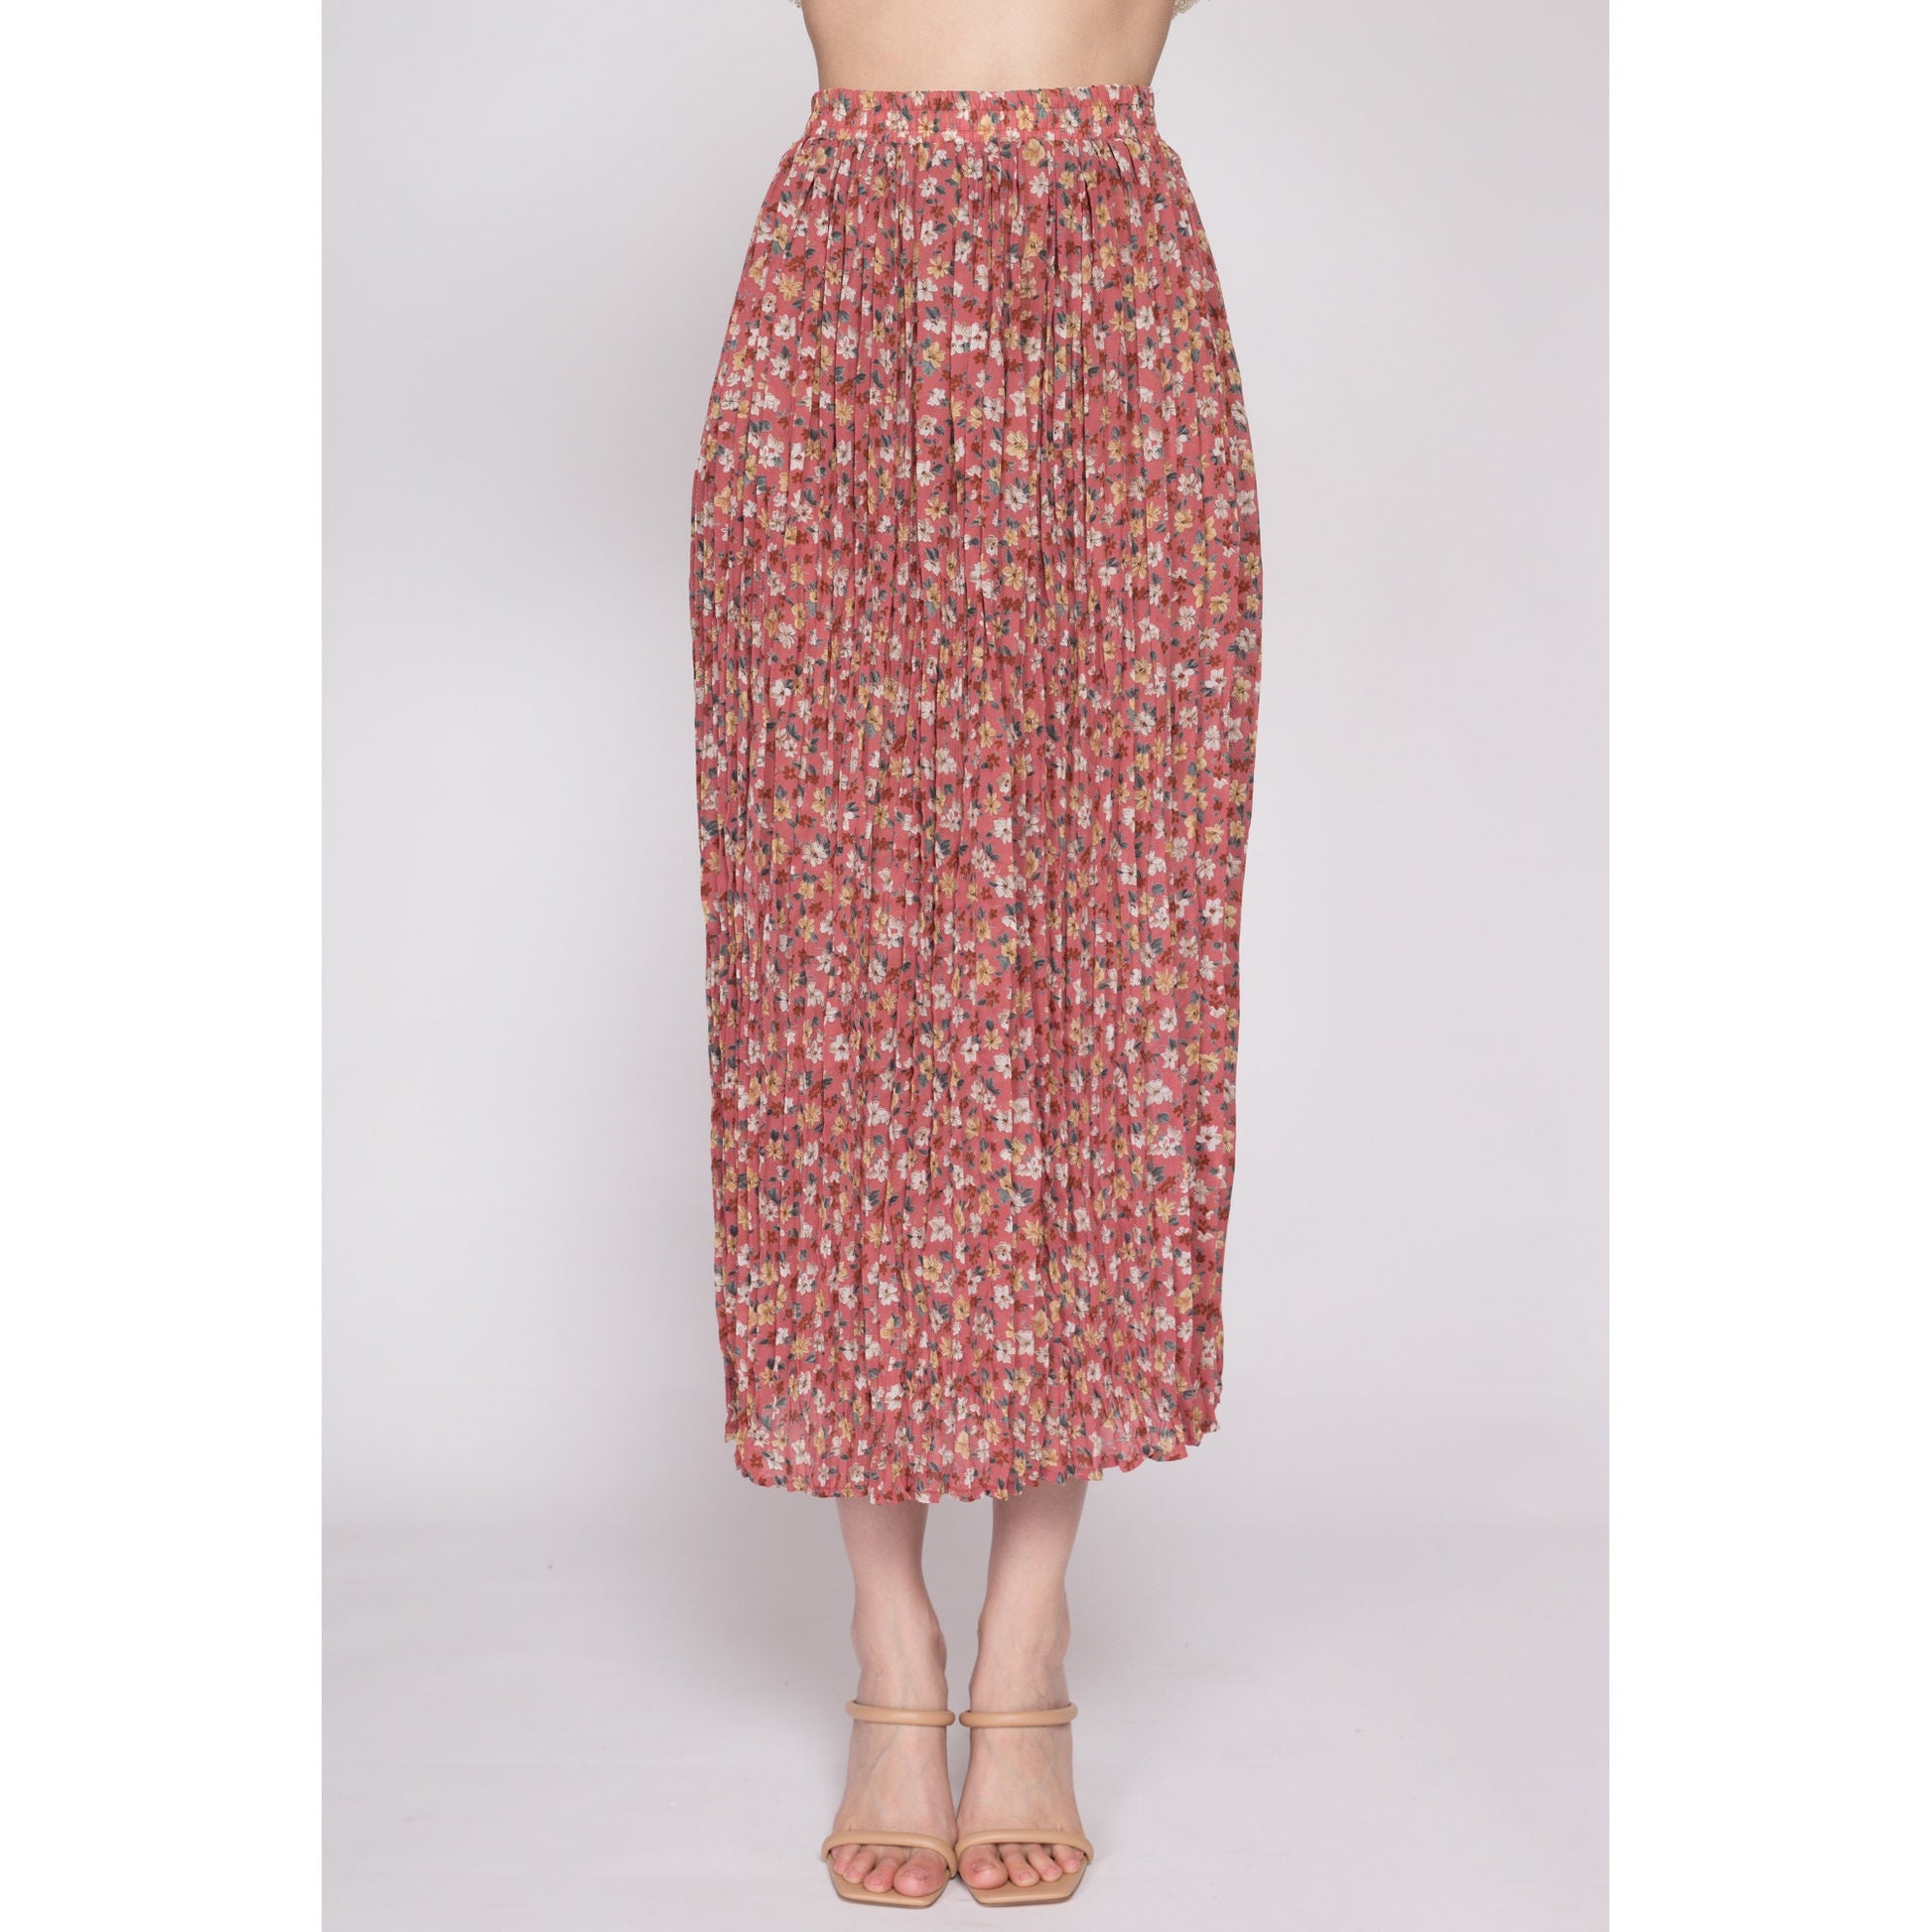 S| 90s Pink Floral Crinkle Pleated Midi Skirt - Small | Vintage High Waist Boho A Line Flowy Skirt